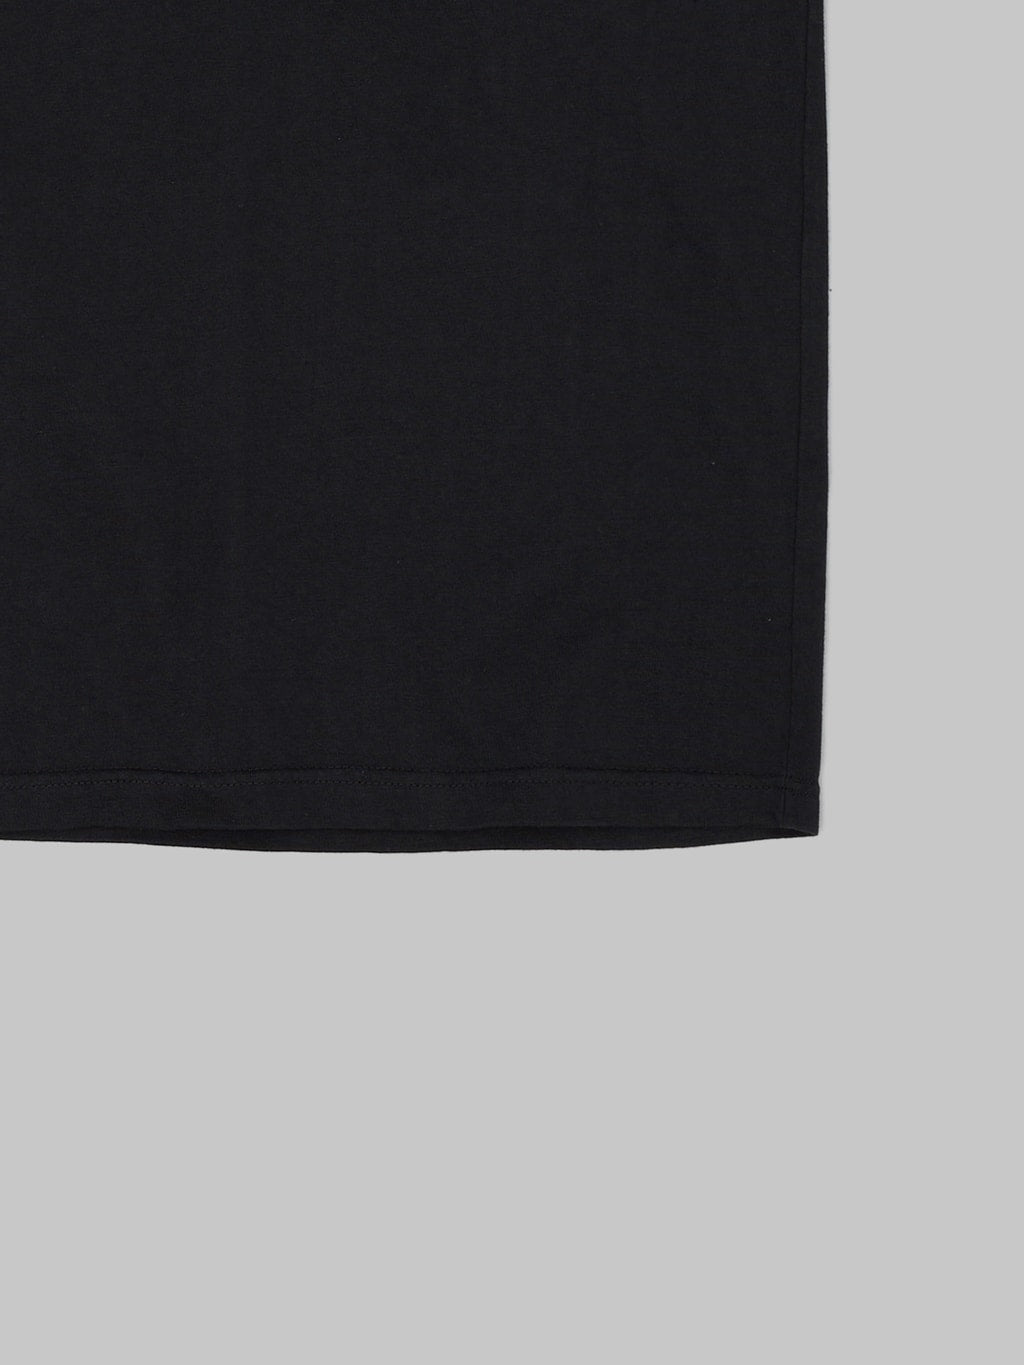 UES Ramayana Crew-Neck Pocket T-Shirt Black